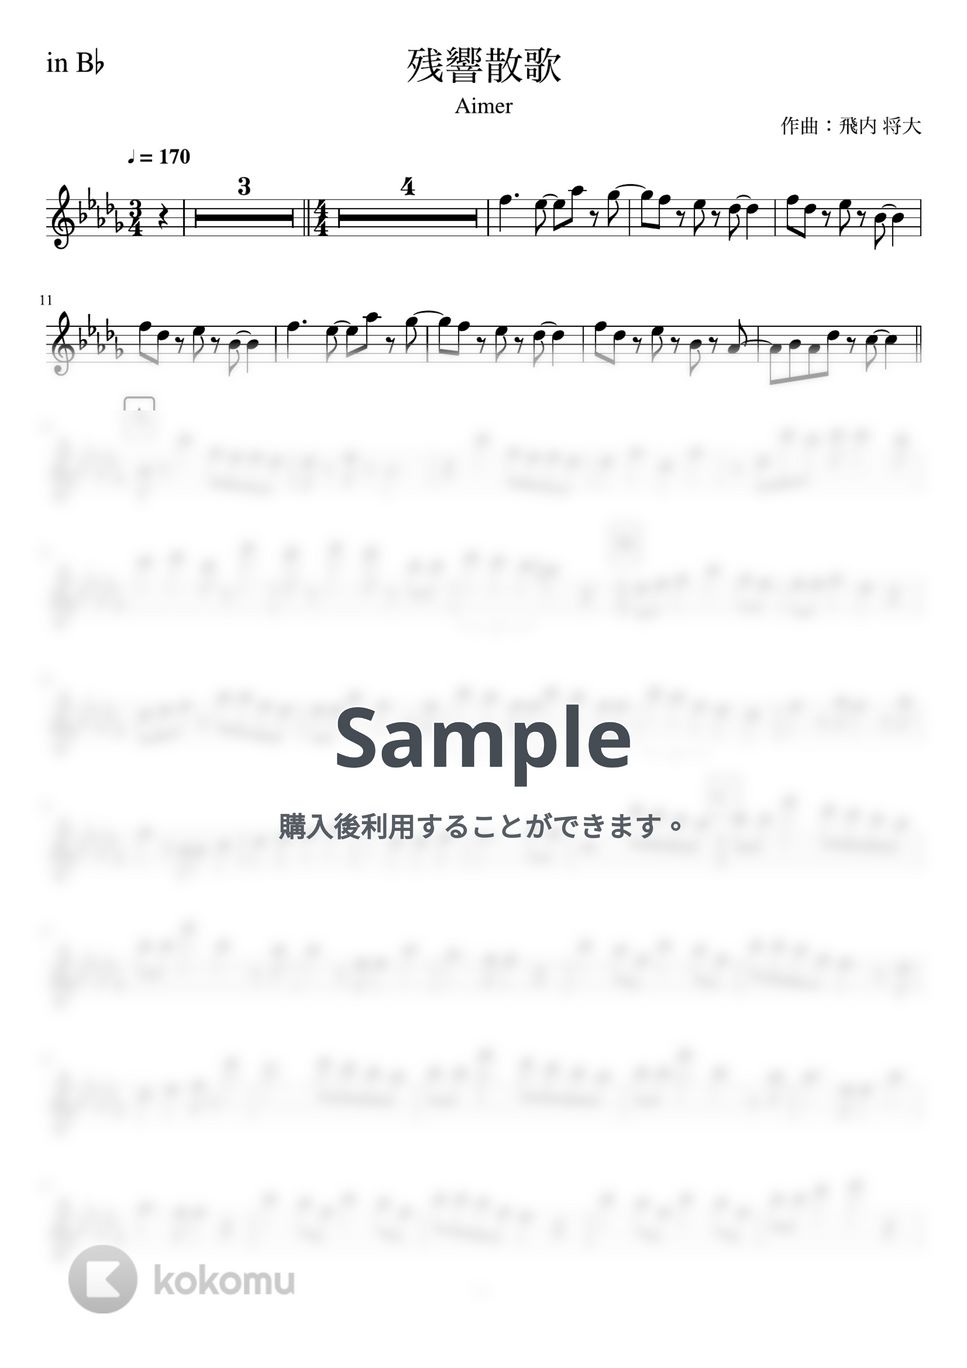 Aimer - 残響散歌 (in B♭) by inojunCH